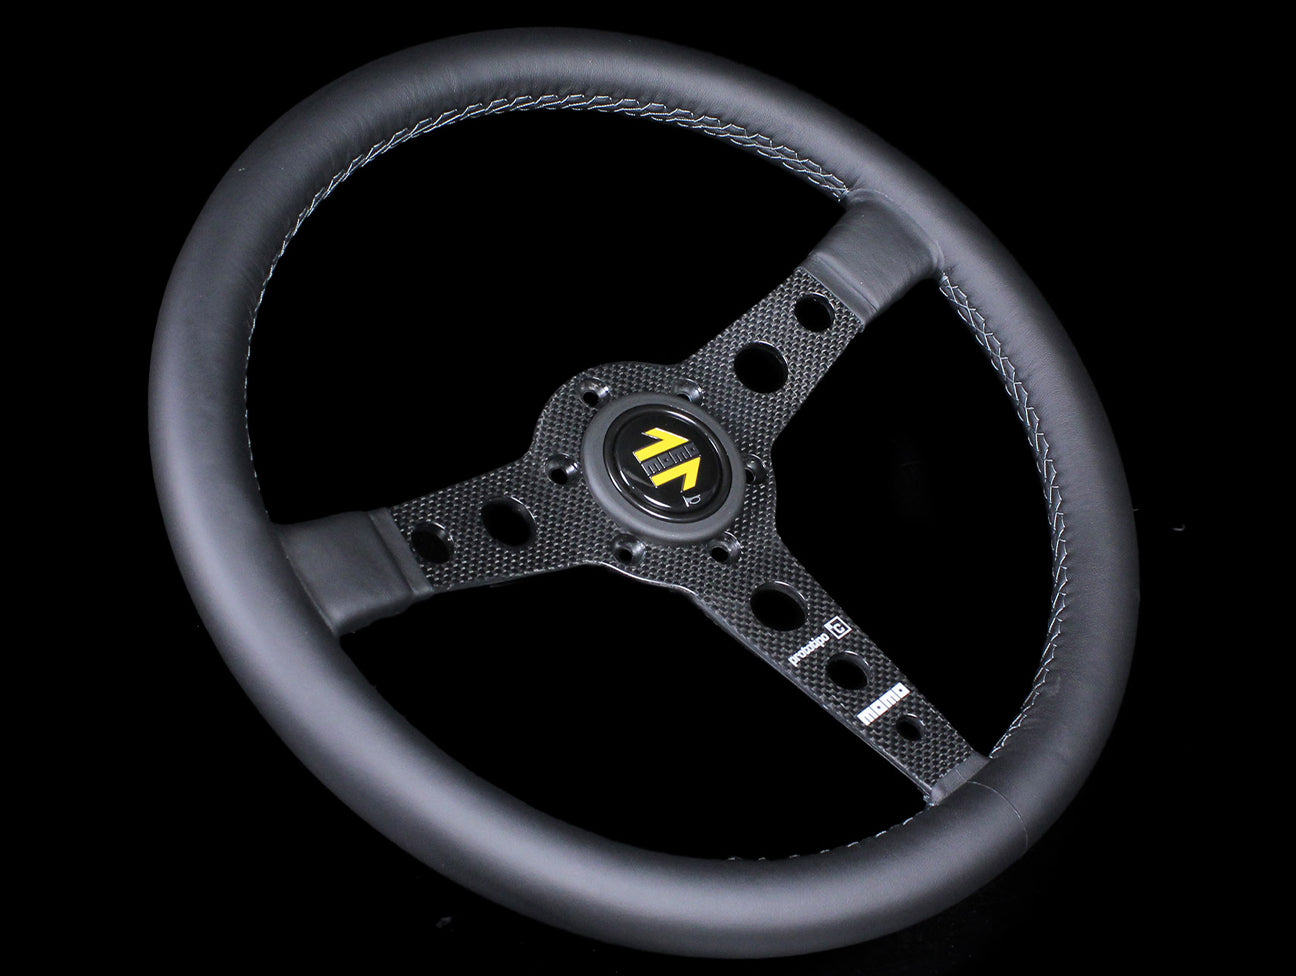 Momo 350mm Prototipo 6C Steering Wheel